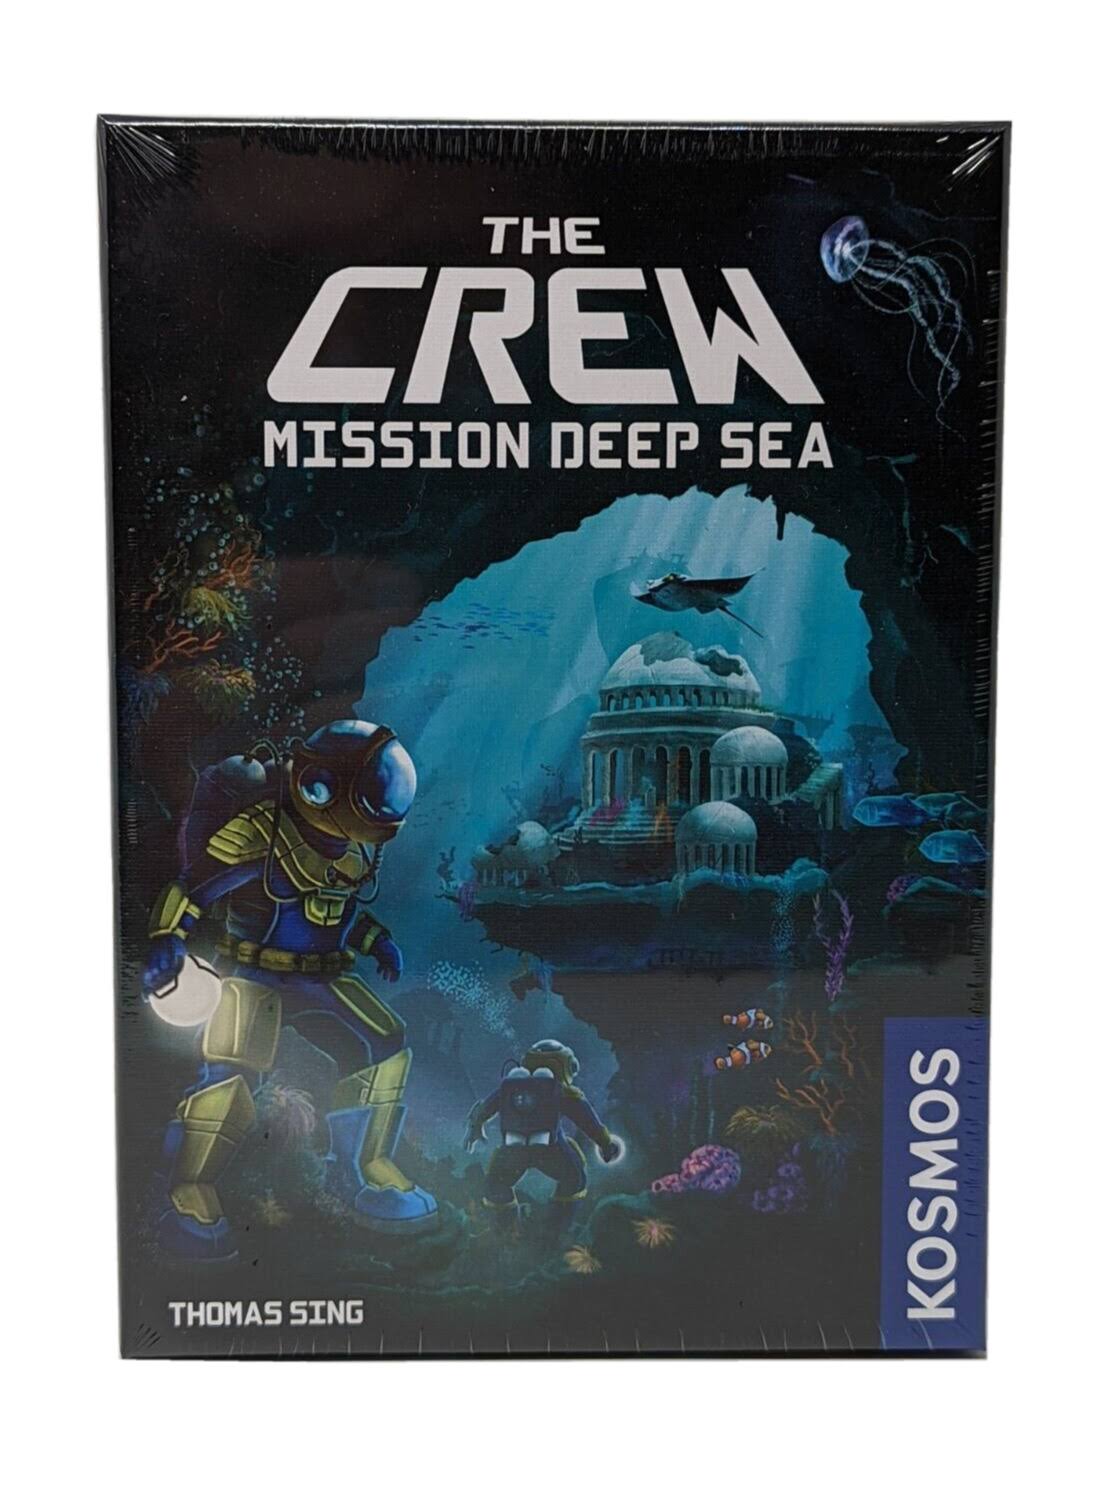 Crew, The - Mission Deep Sea